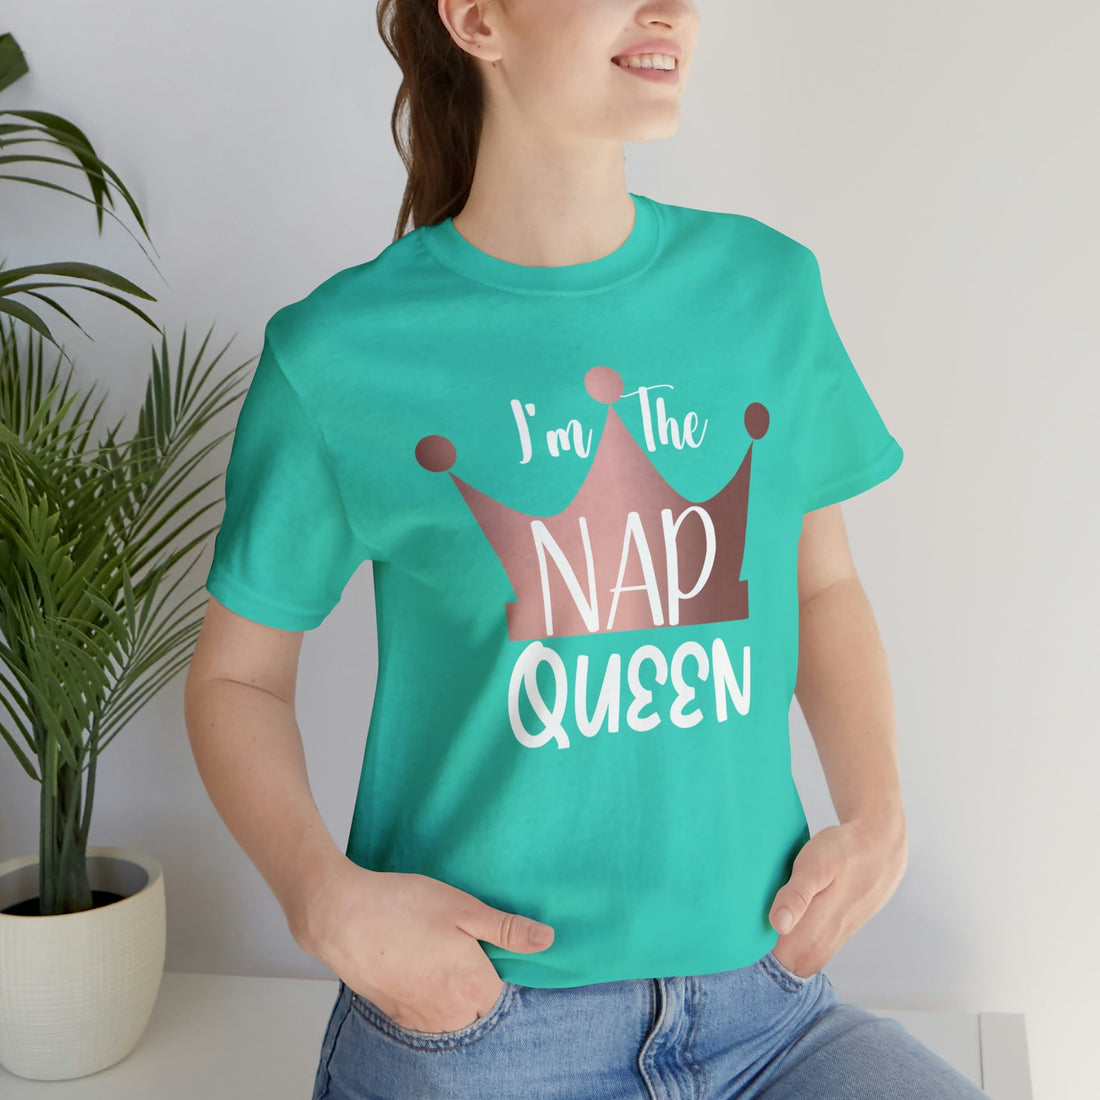 Nap Queen - T-Shirt - Positively Sassy - Nap Queen